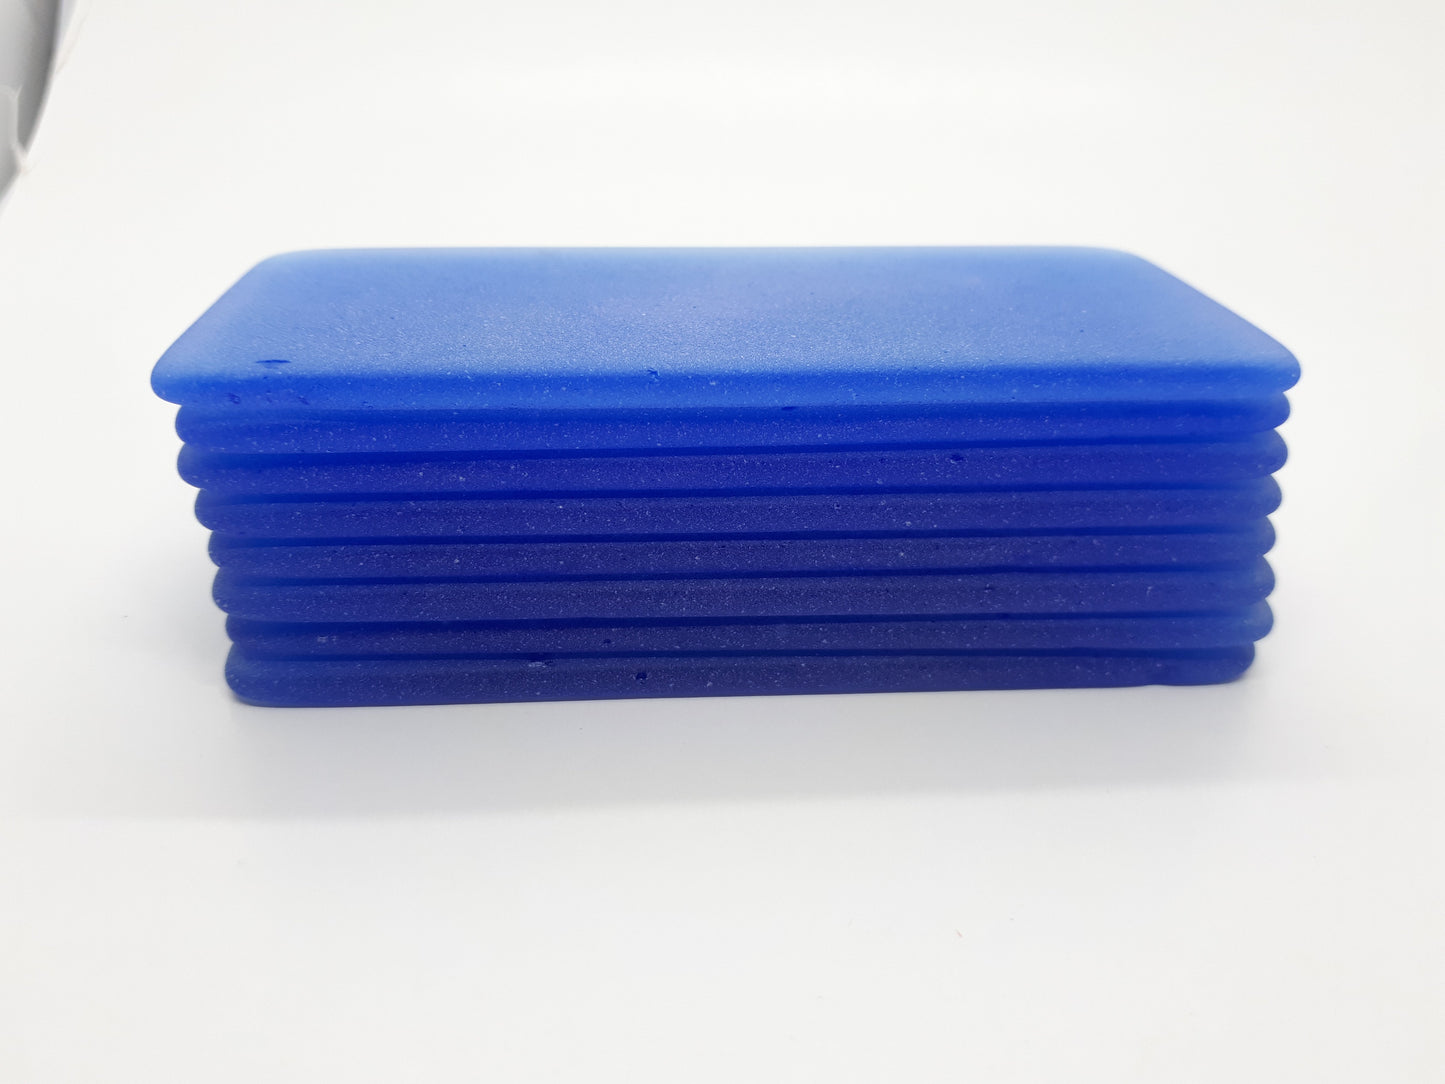 Cobalt blue sea glass place cards - Set of 20 tumble glass tiles